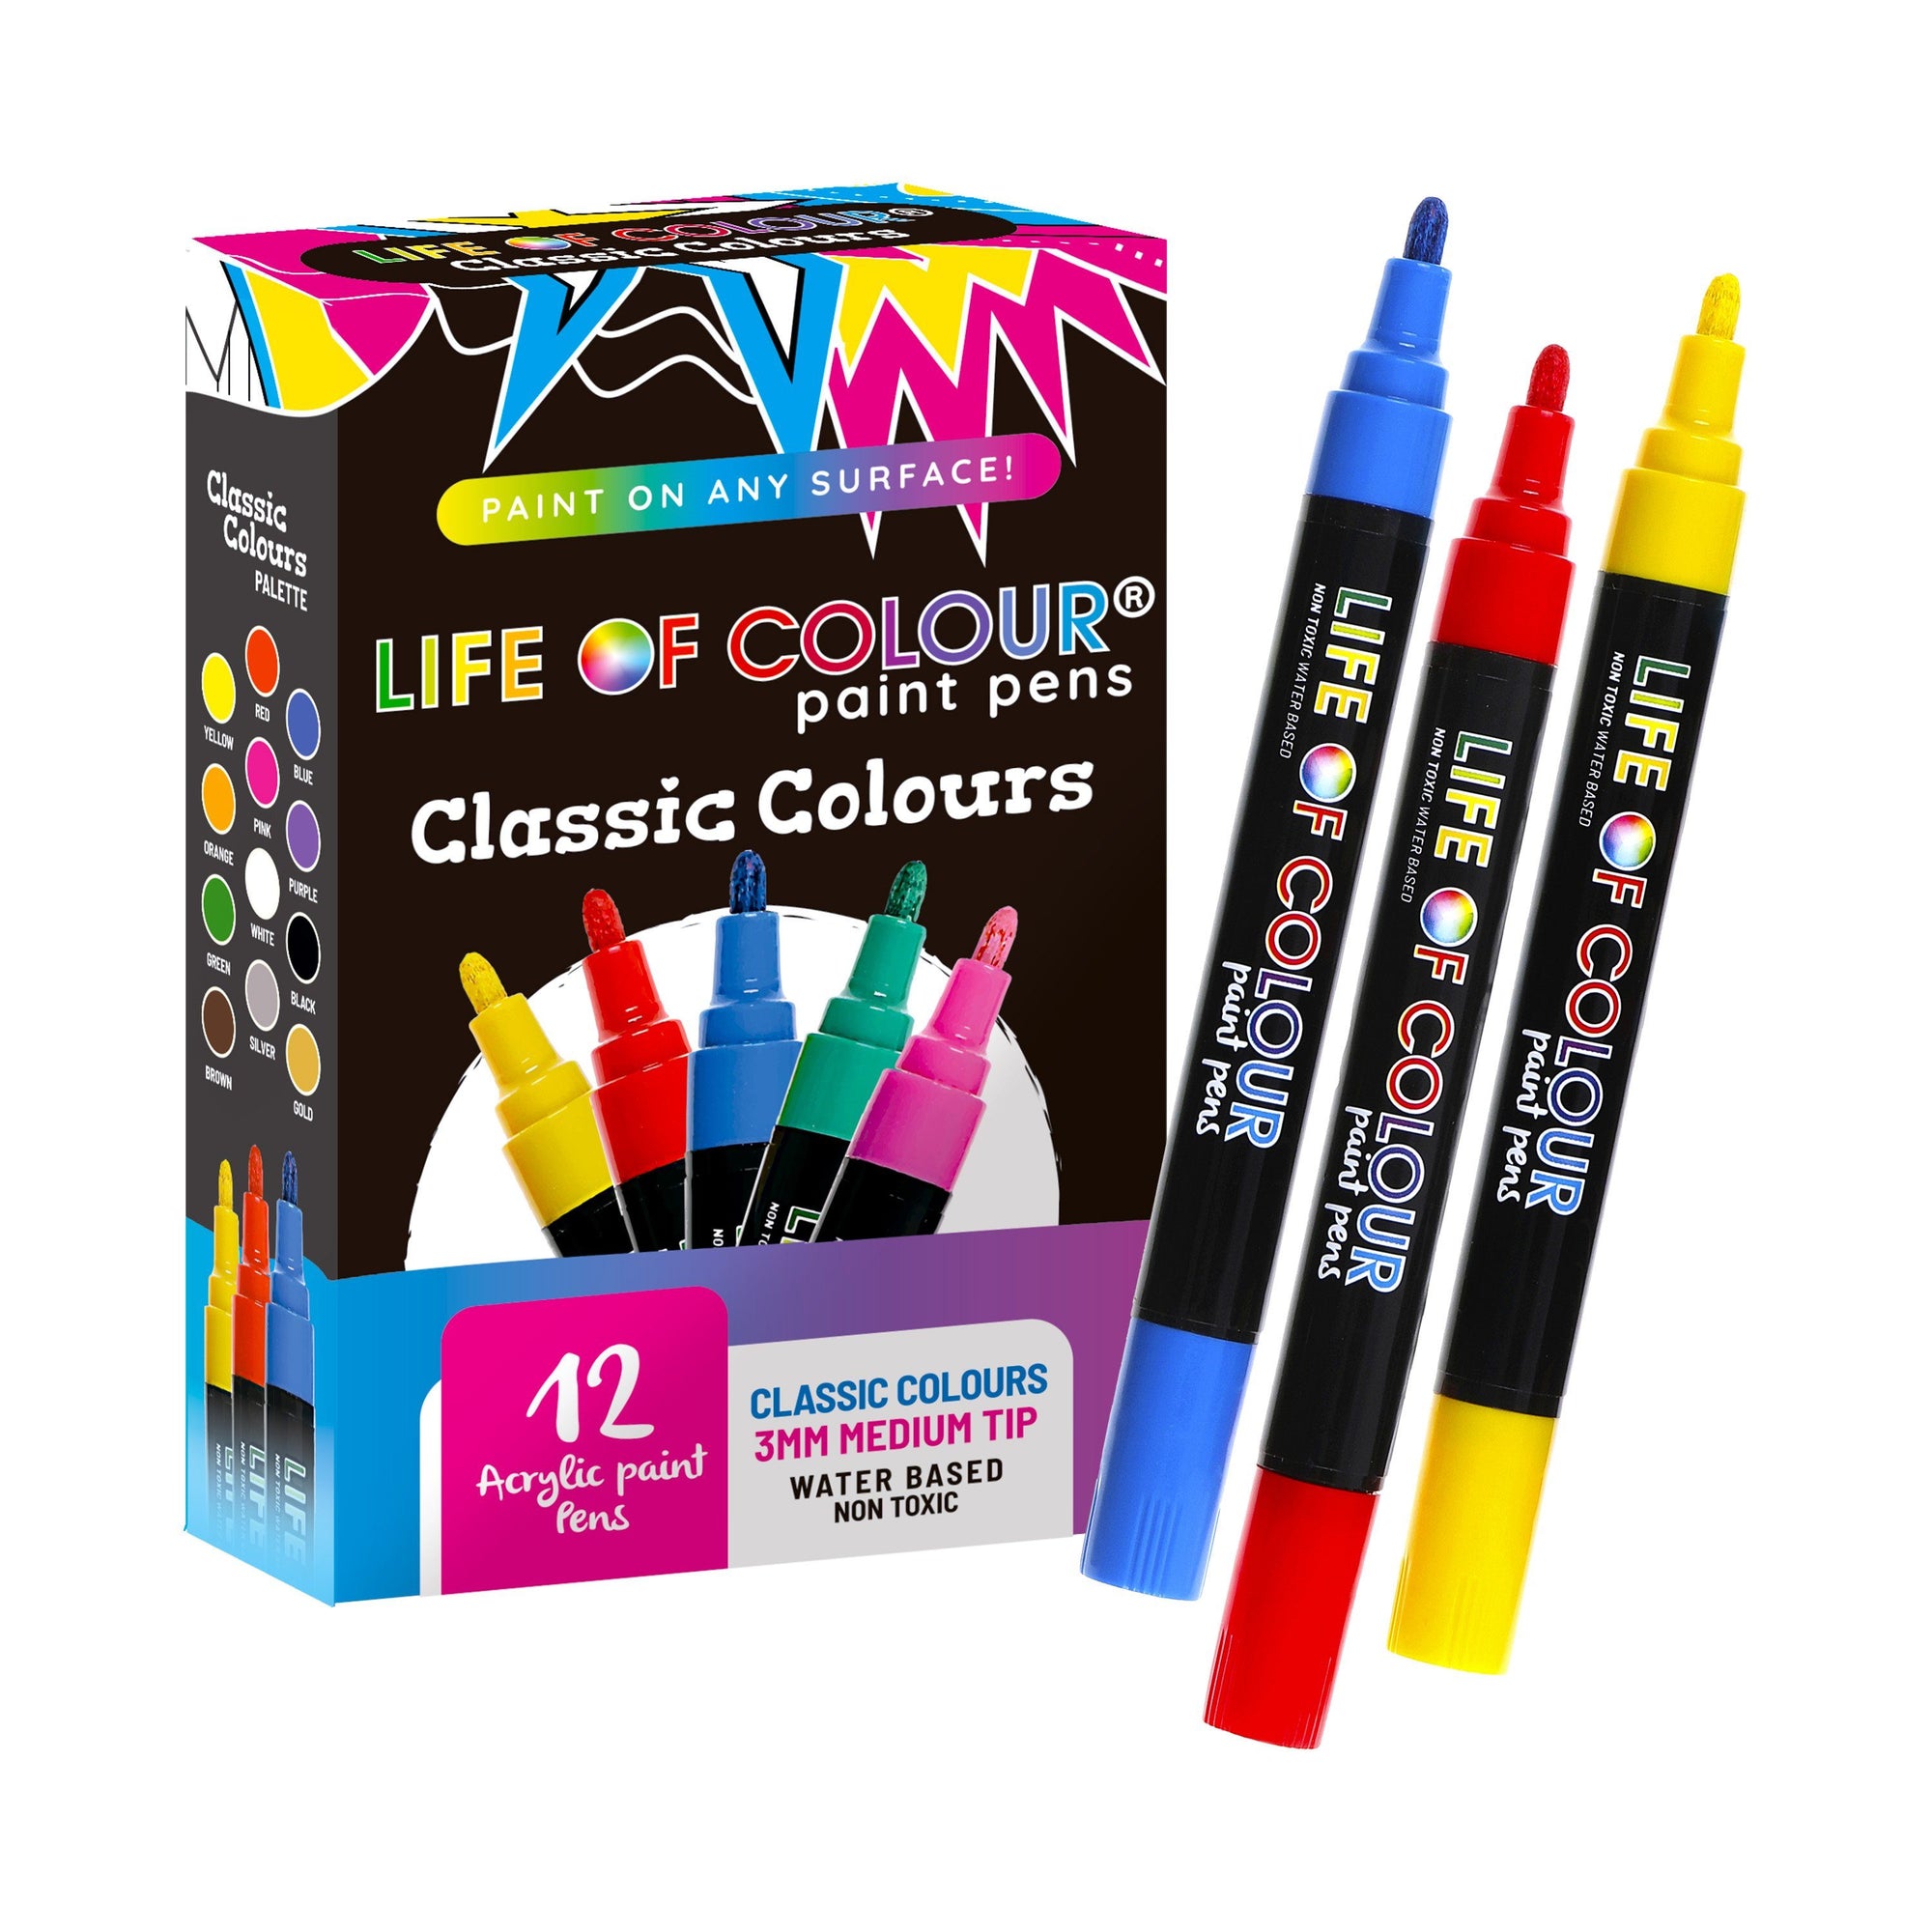 https://cdn.shopify.com/s/files/1/2374/1375/products/life-of-colour-acrylic-paint-pens_classic-3mm_2000x.jpg?v=1633629679